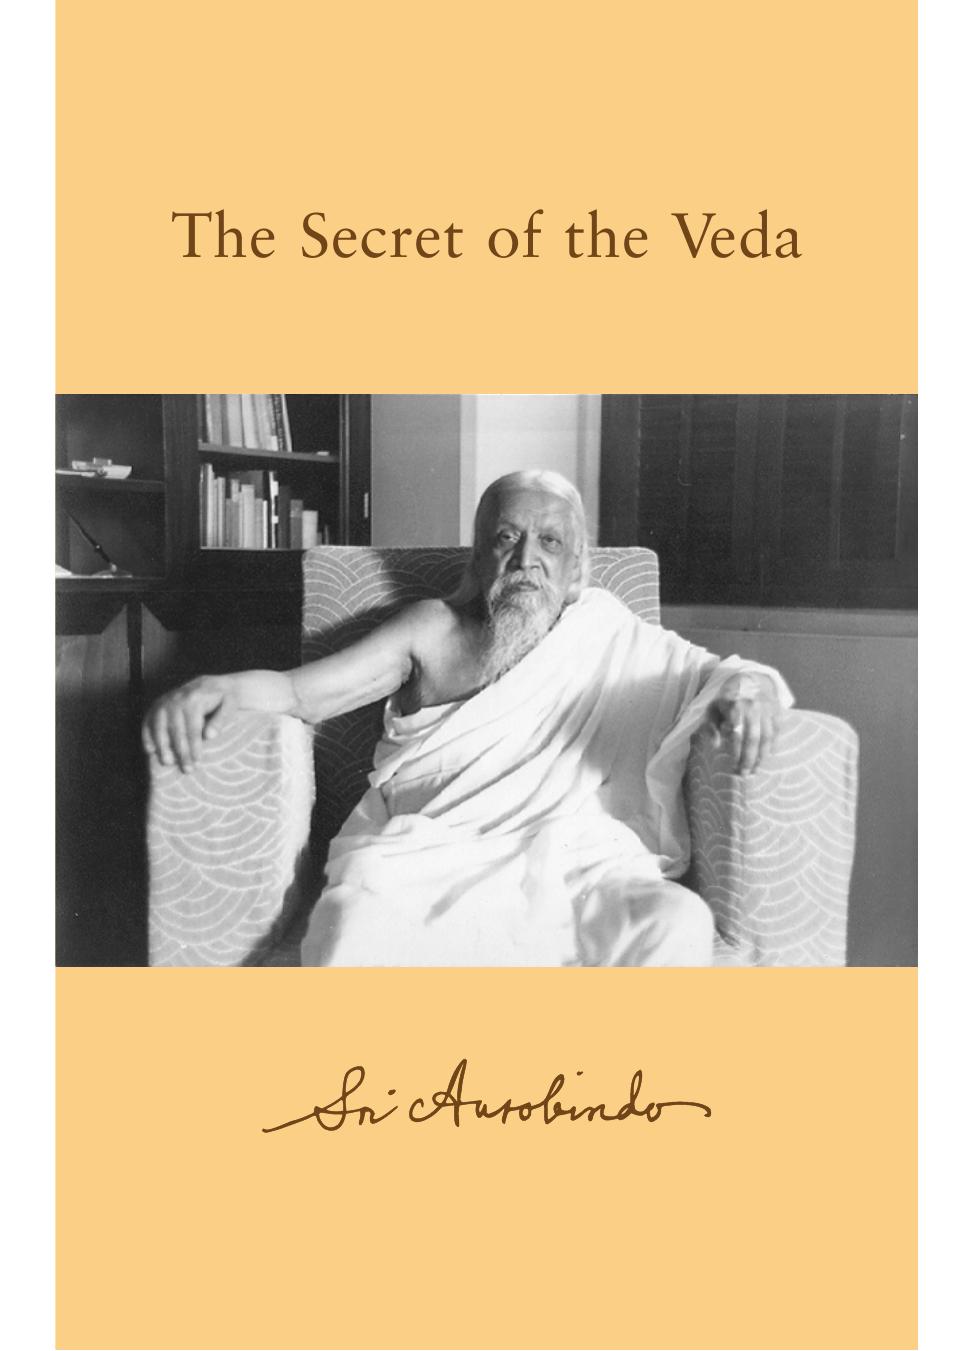 The Secret of the Veda by Sri Aurobindo